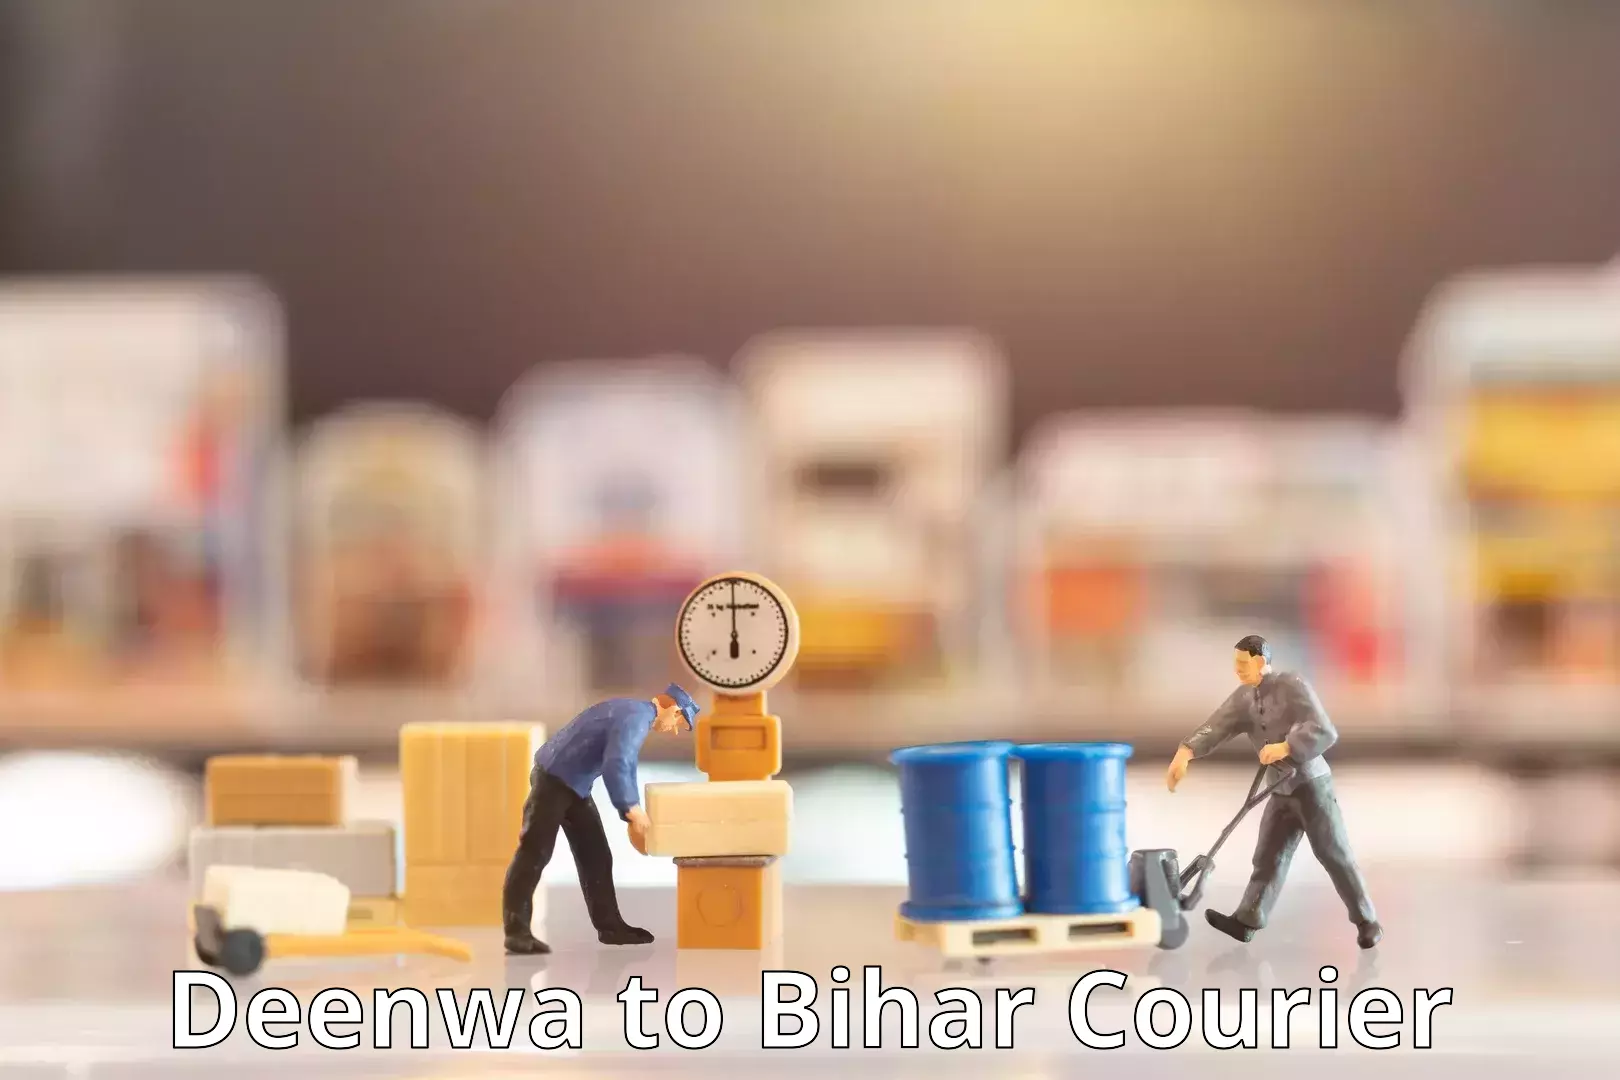 Global shipping networks Deenwa to Bihar